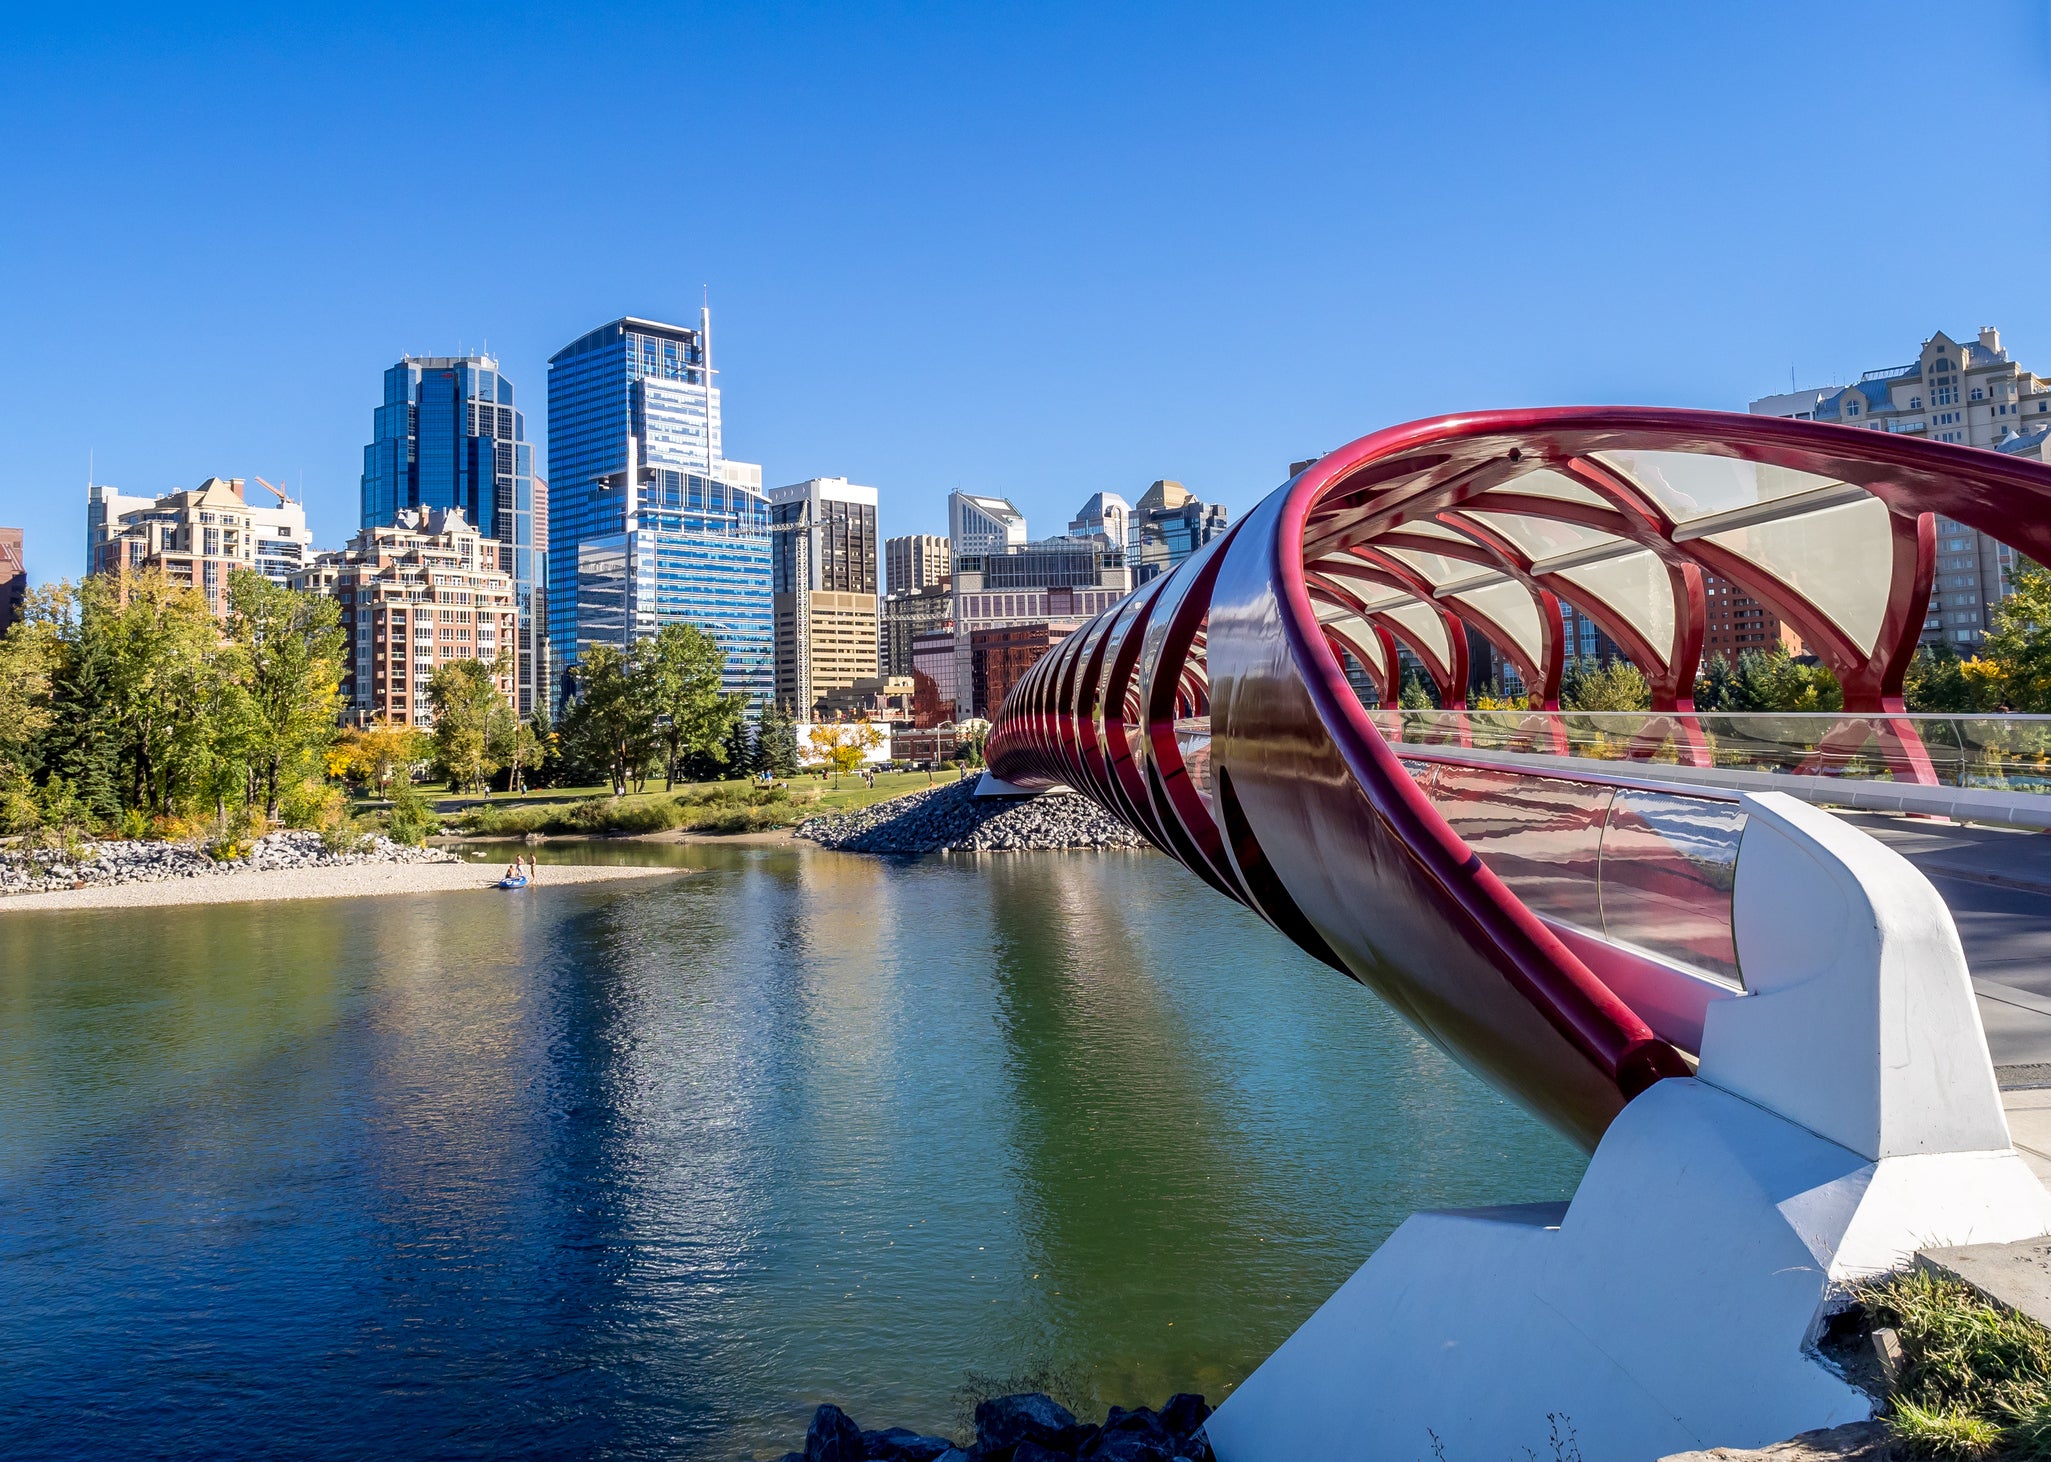 Calgary's Peace Bridge opened in 2012